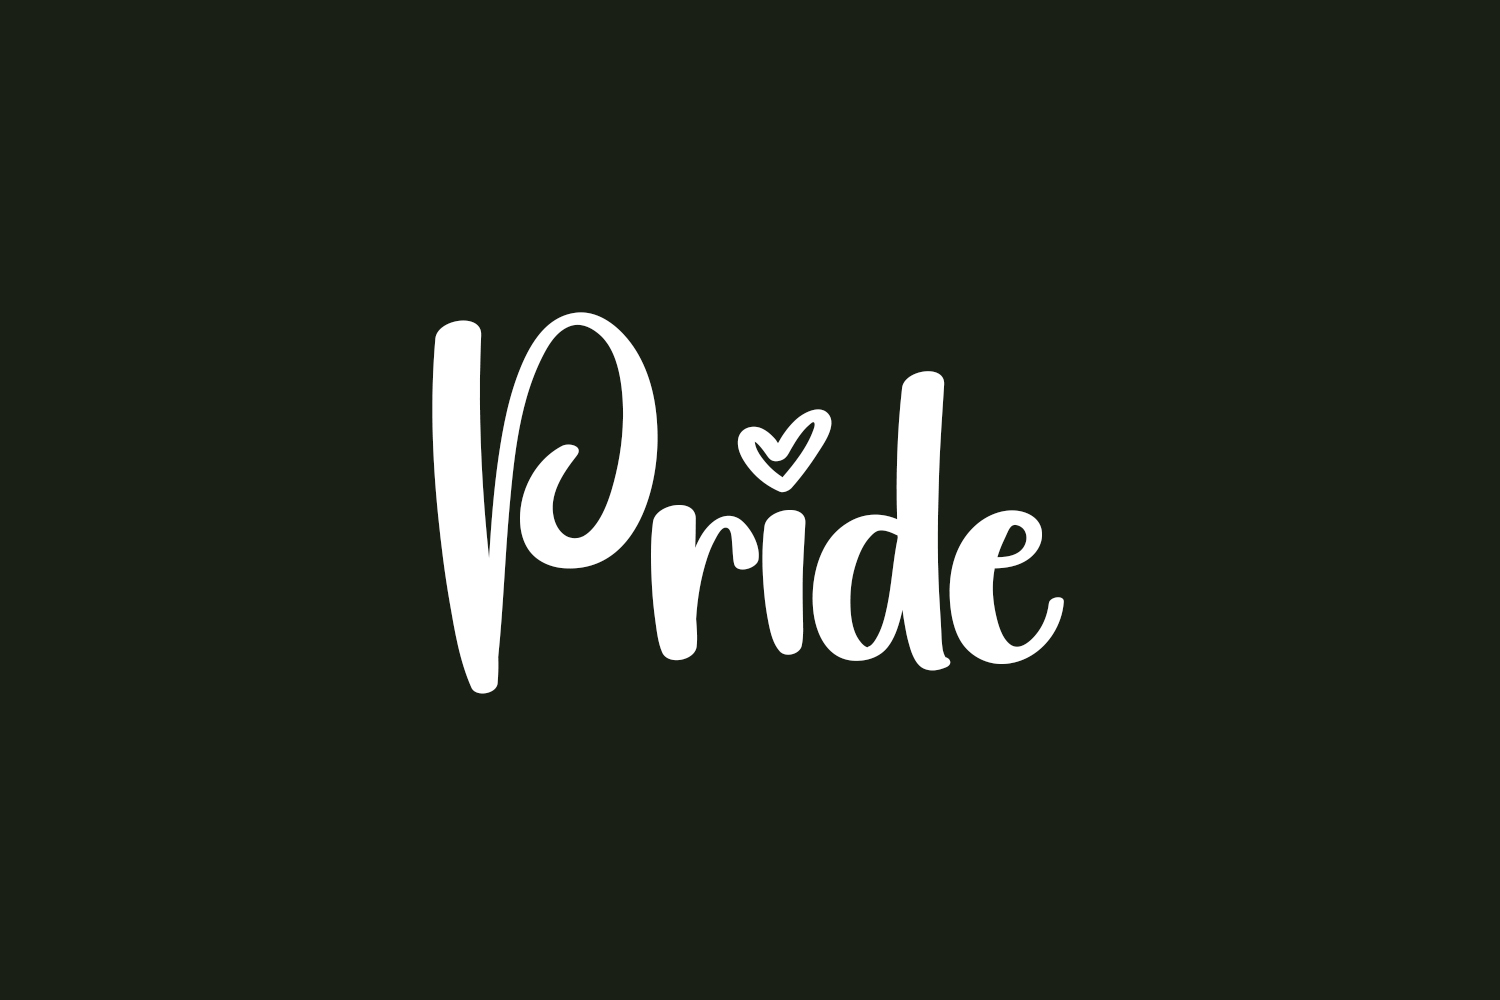 Pride Free Font